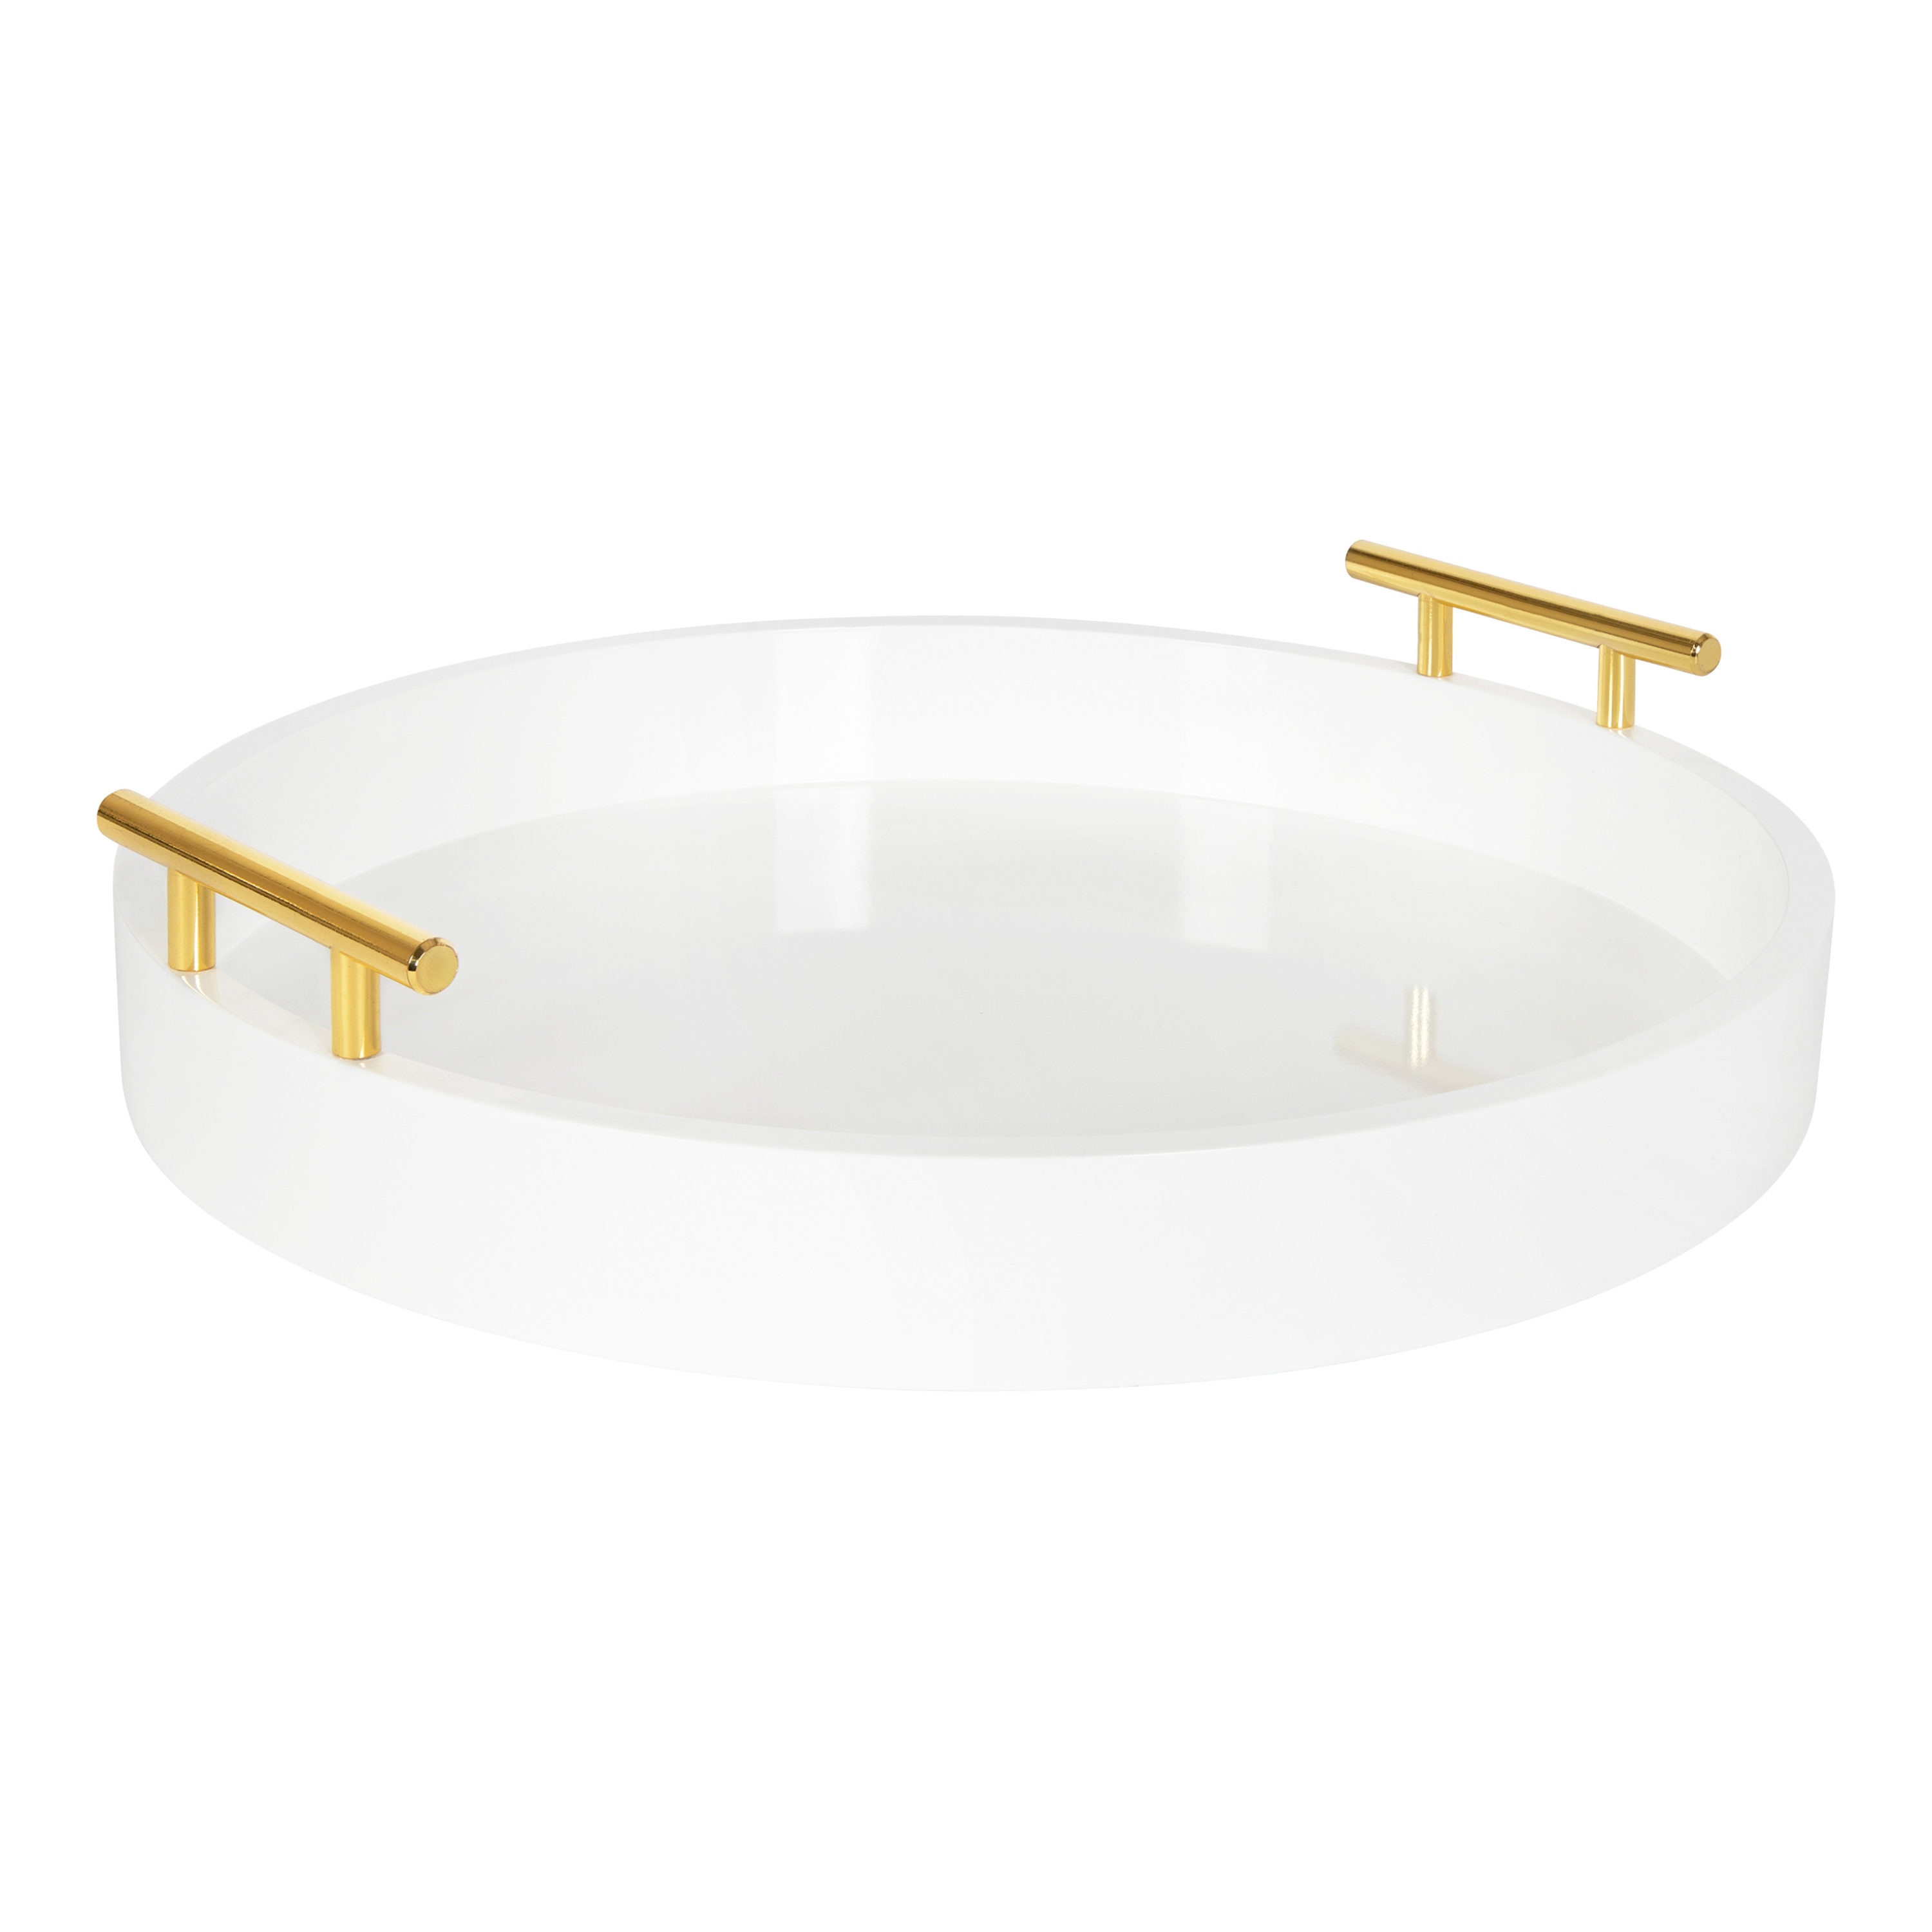 Trinket Dish Display Tray Navy or White Large Round Decorative Tray